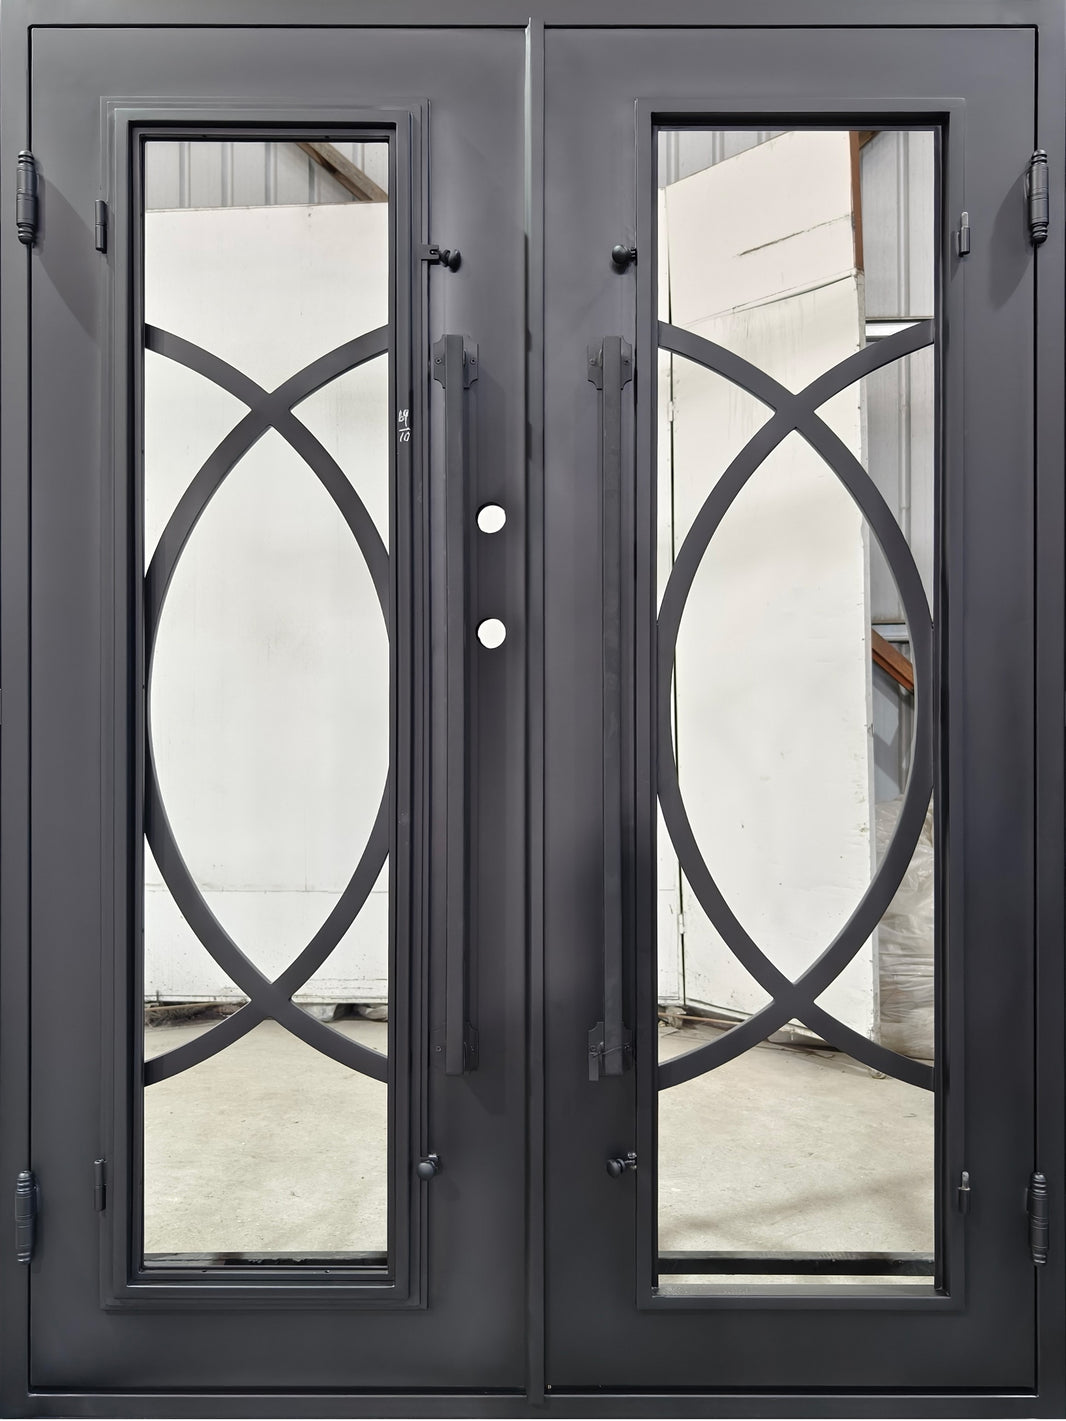 Cross Arch iron door Design | Square Top With kickplate | Model # IWD 1014